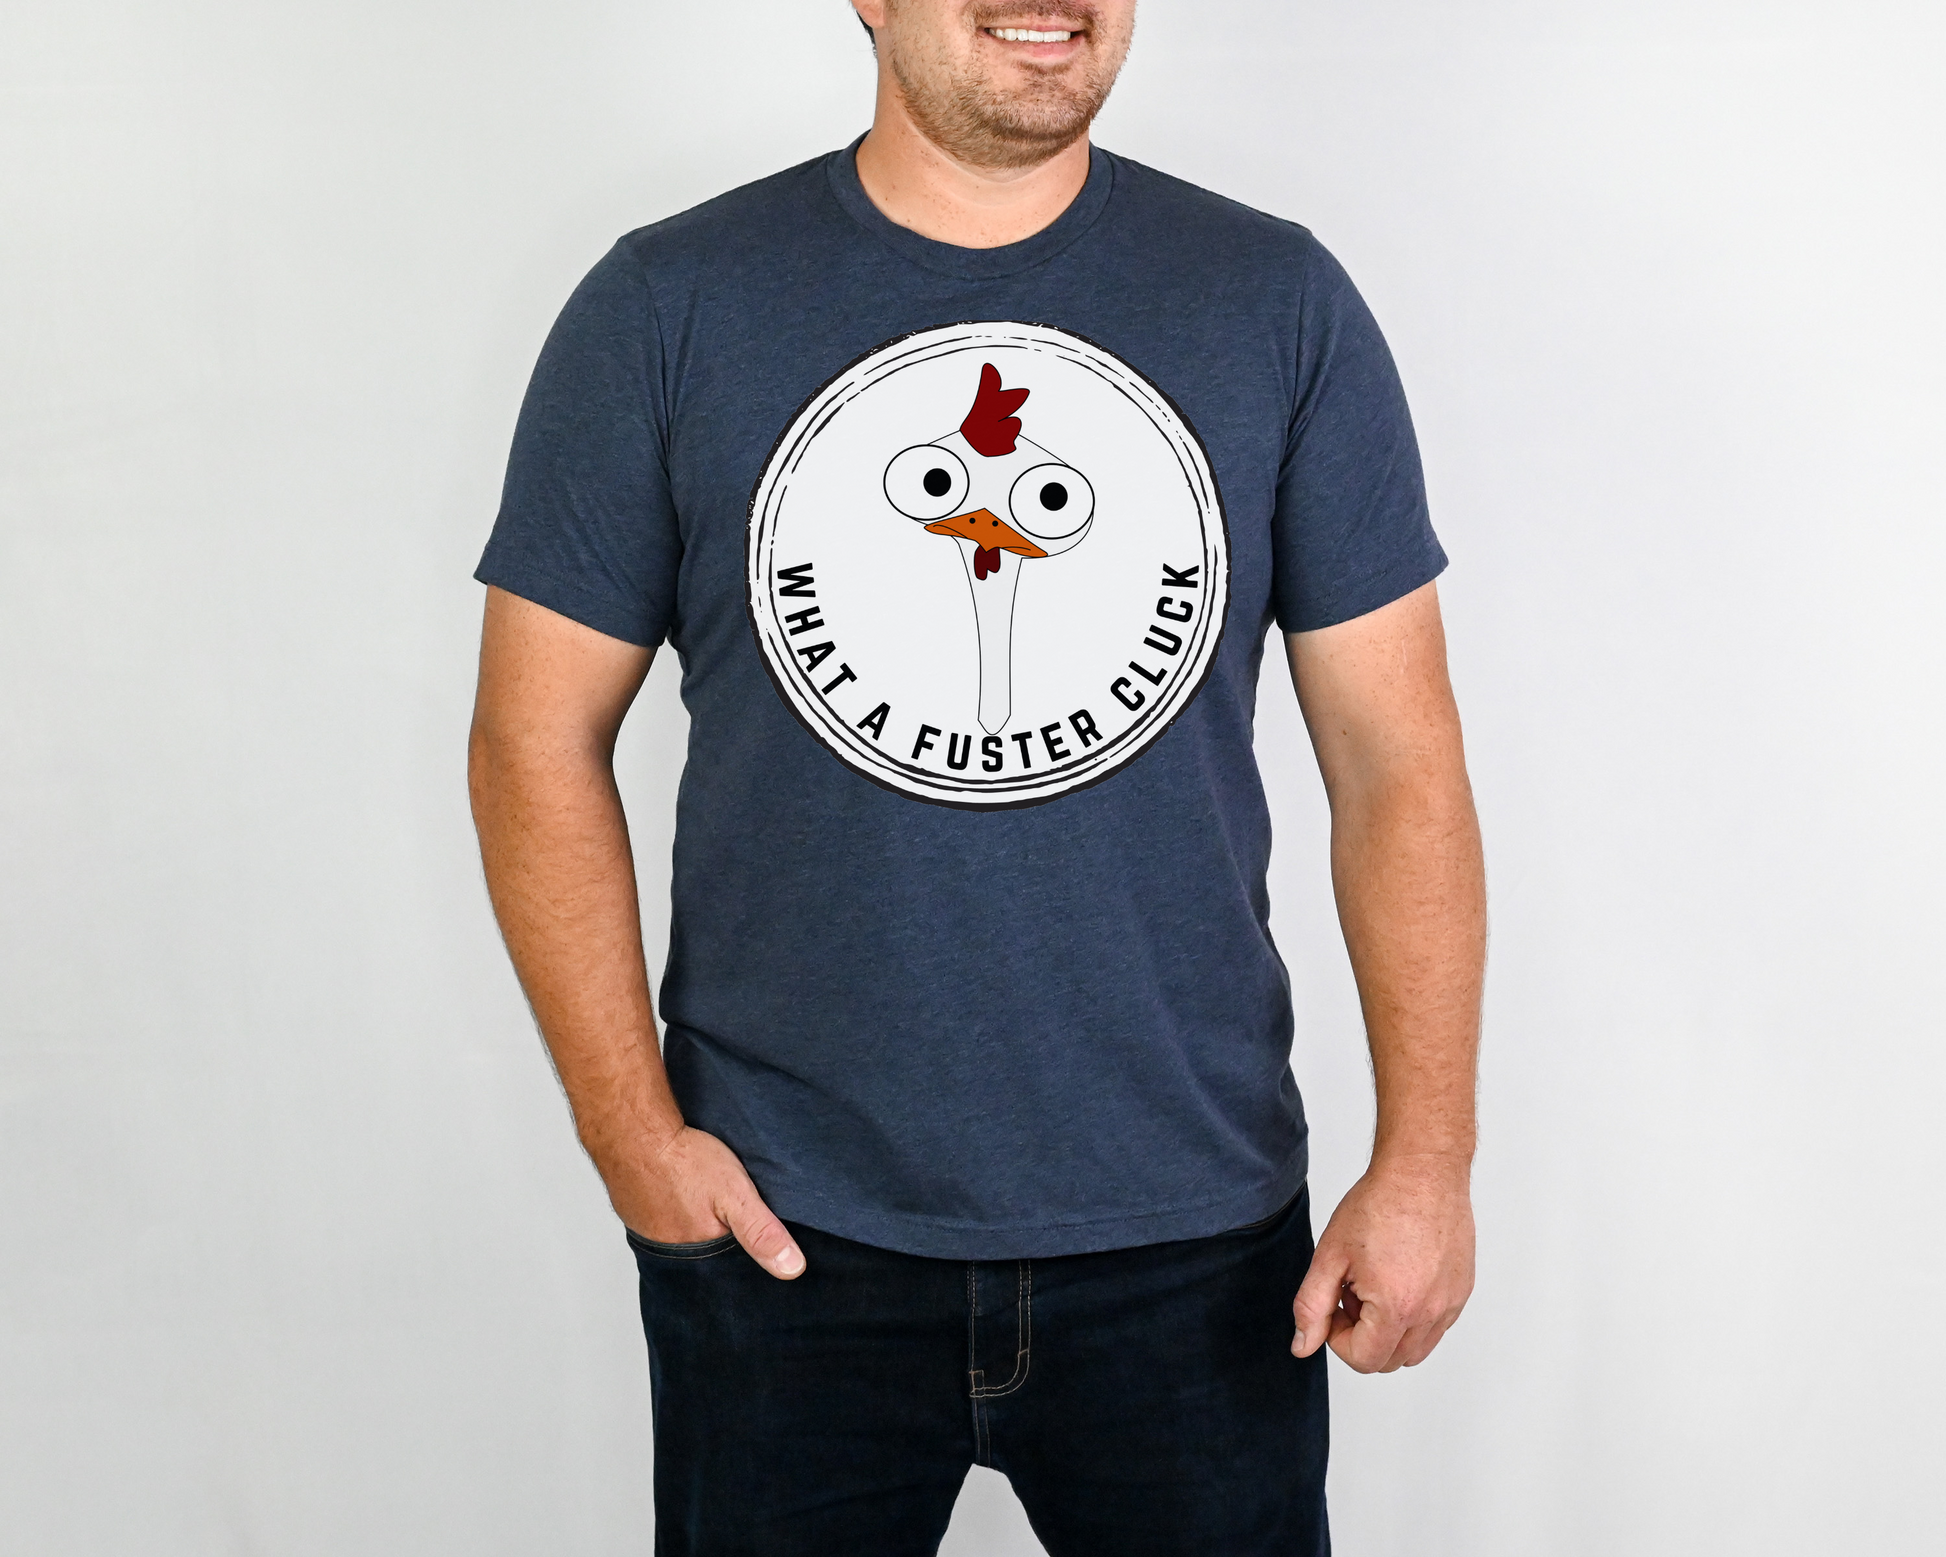 Fuster Cluck Navy Chicken Shirt - Chicken Gift - funny chicken shirt